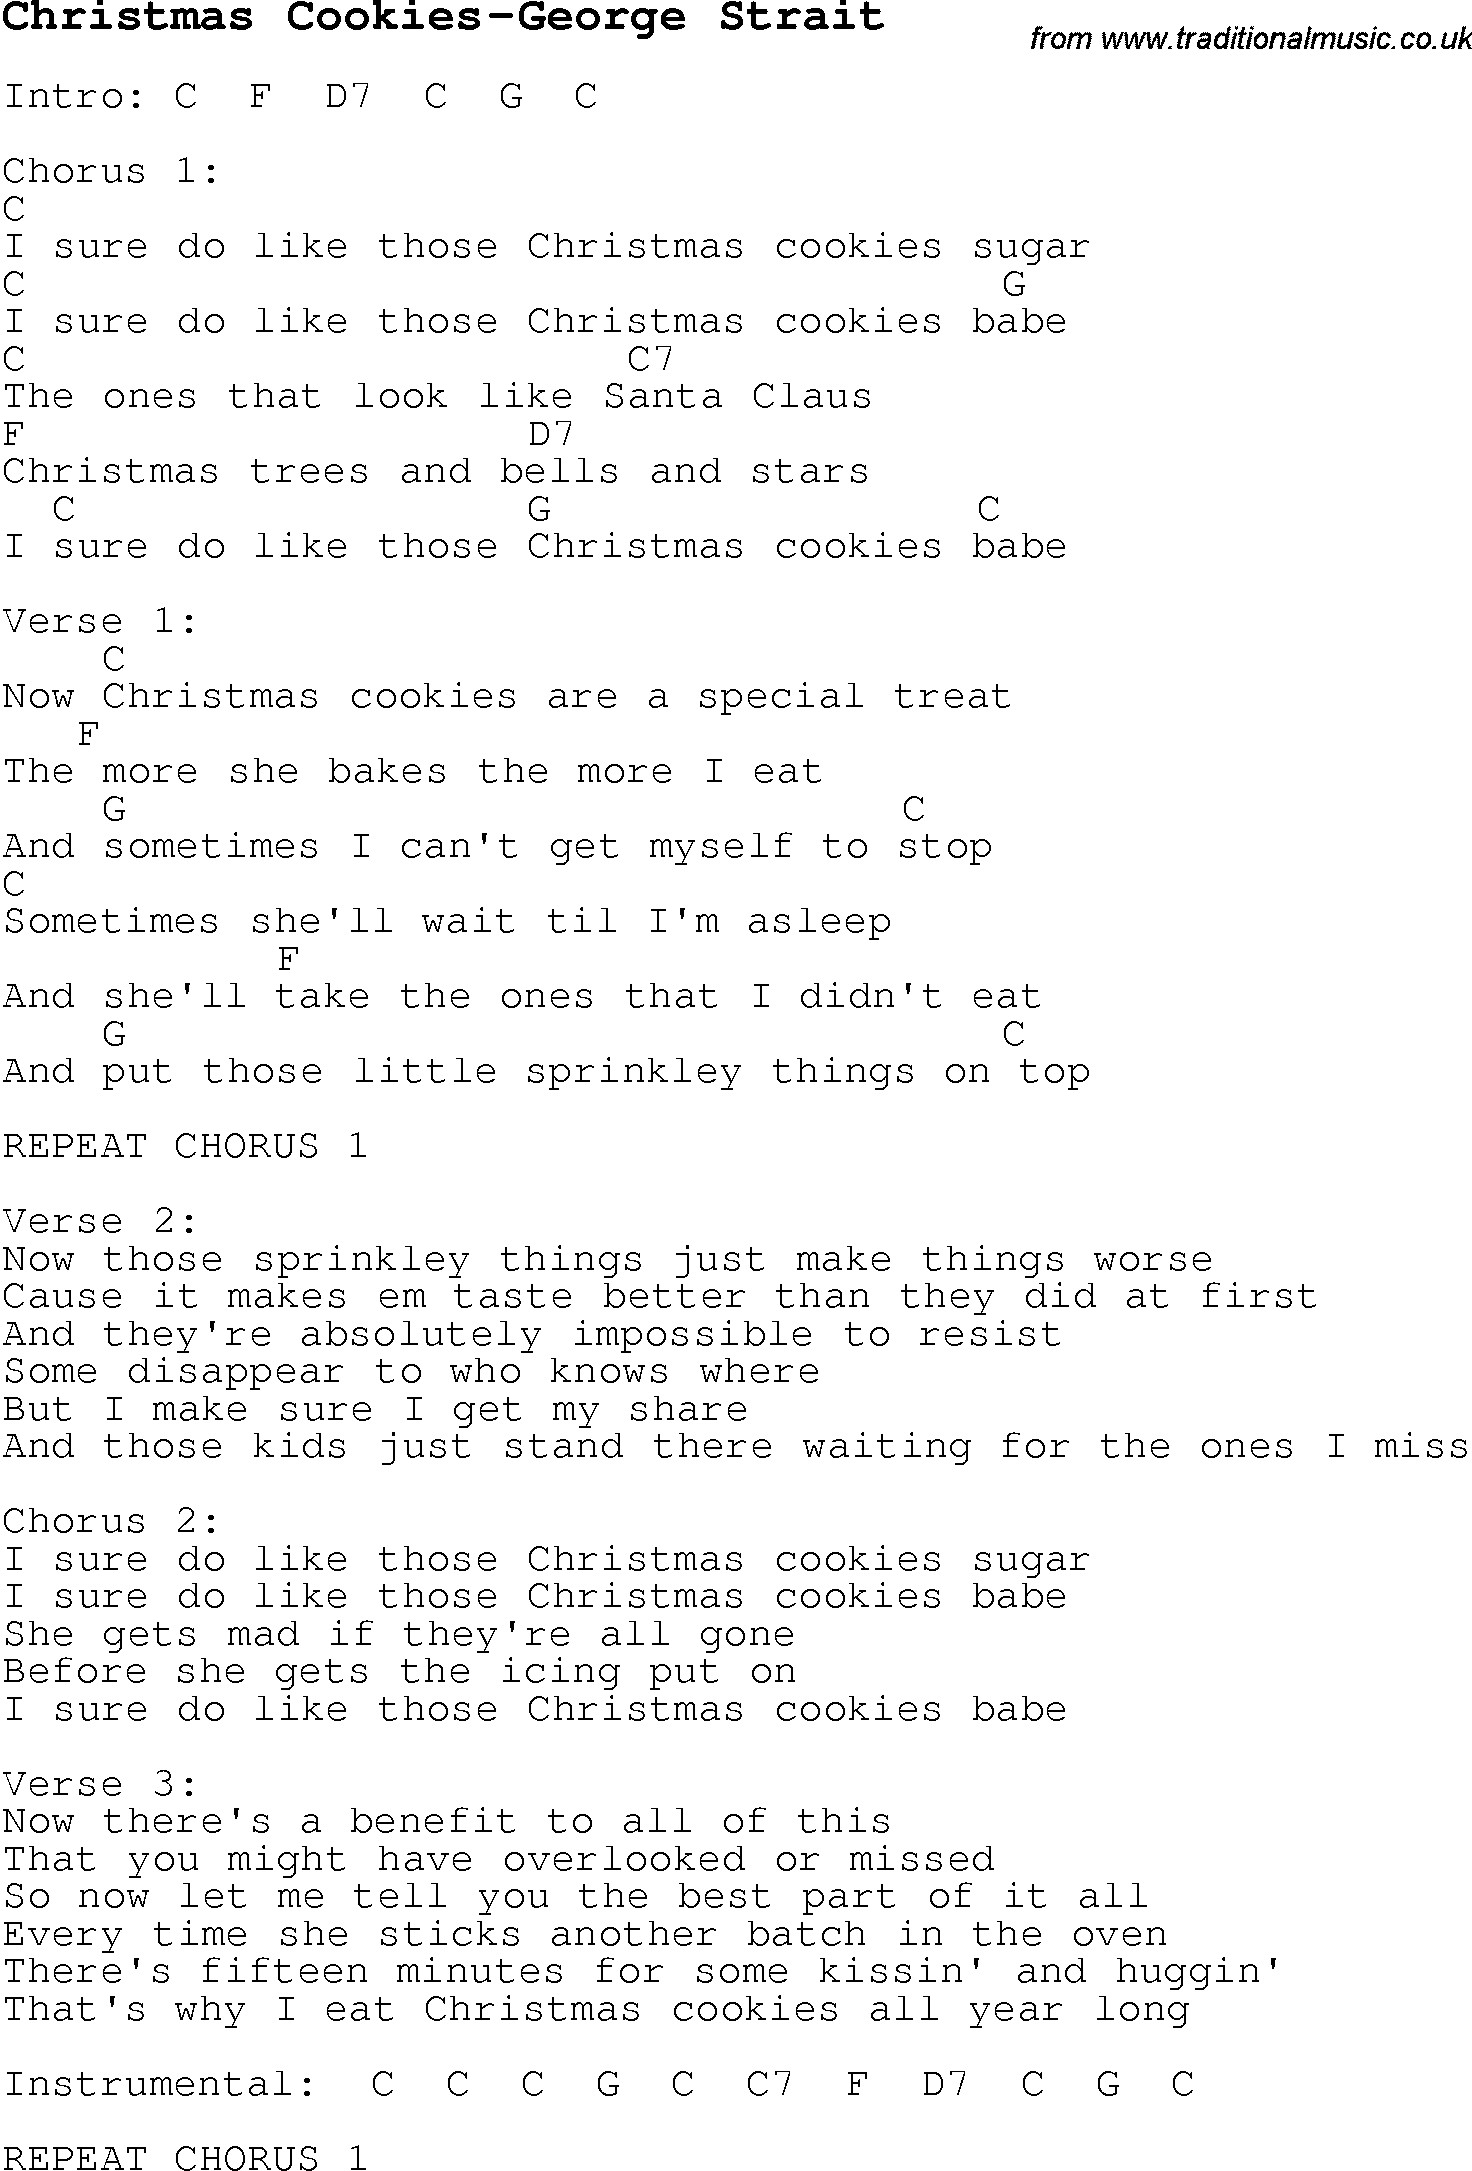 George Strait Christmas Cookies Lyrics
 Christmas Carol Song lyrics with chords for Christmas